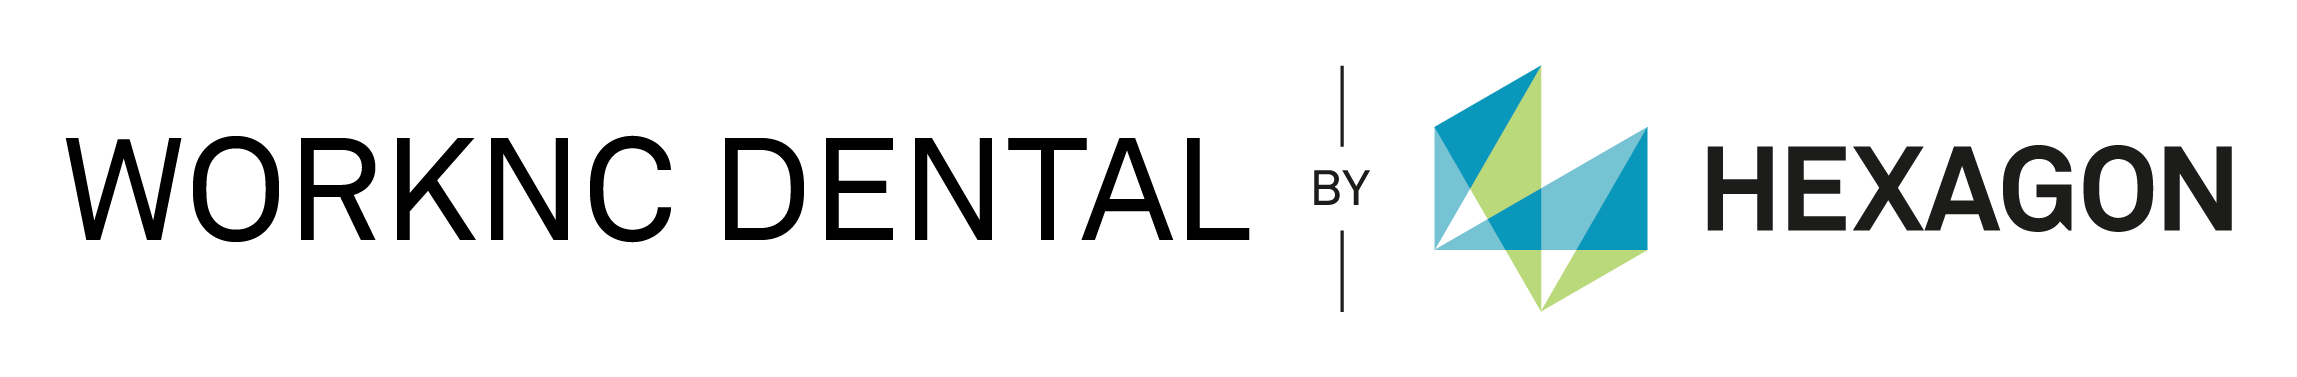 Hexagon WORKNC DENTAL logo